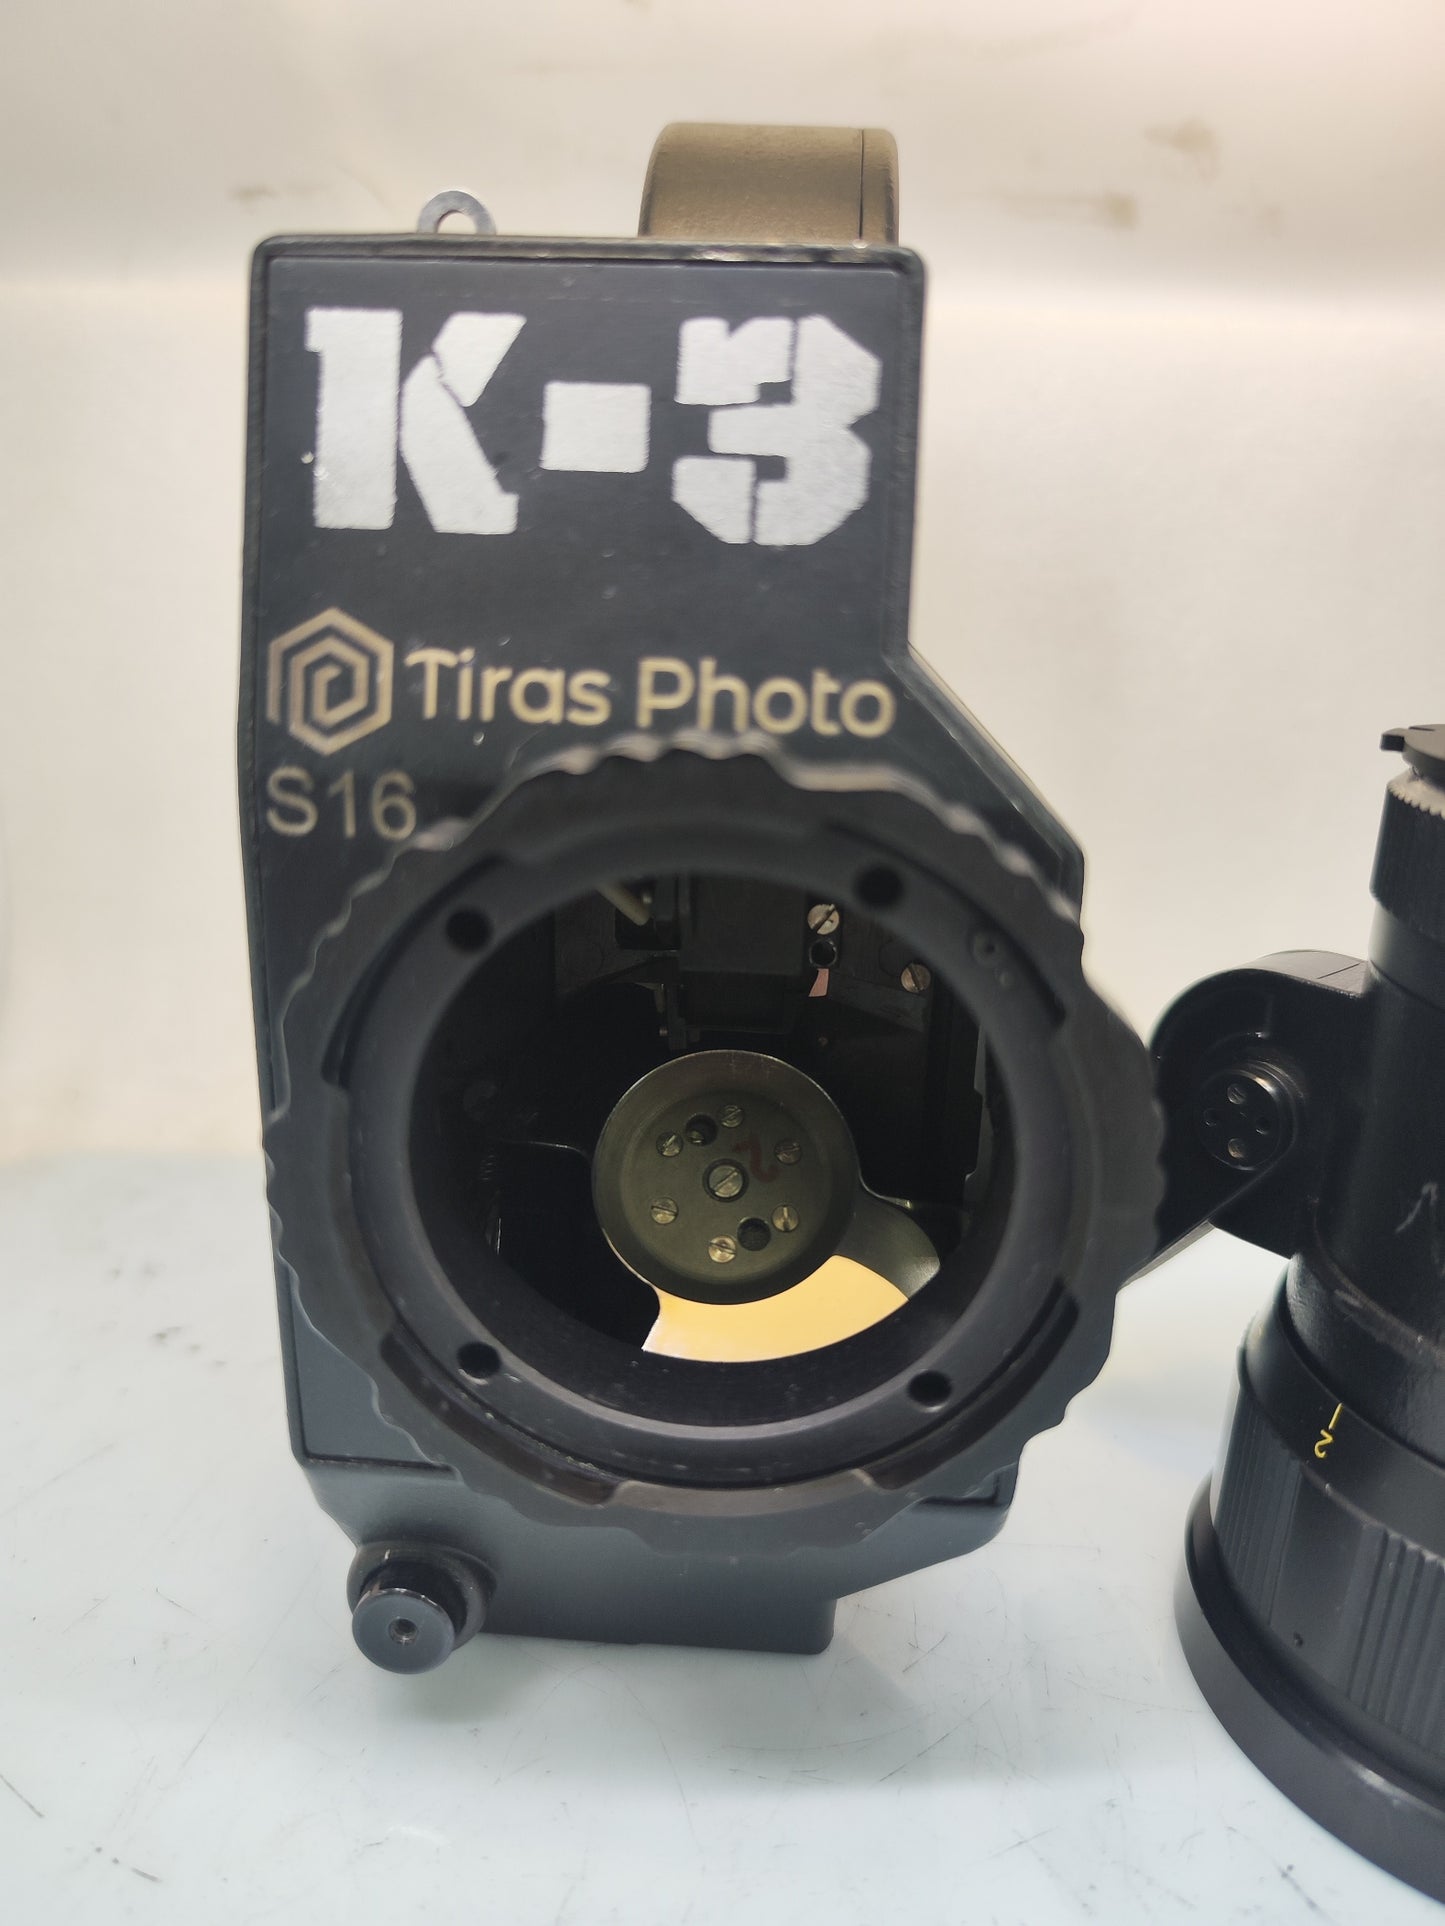 ARRI PL mount Krasnogorsk-3 Ultra16 1.85:1 16mm Movie Camera K-3 K3 RED AATON